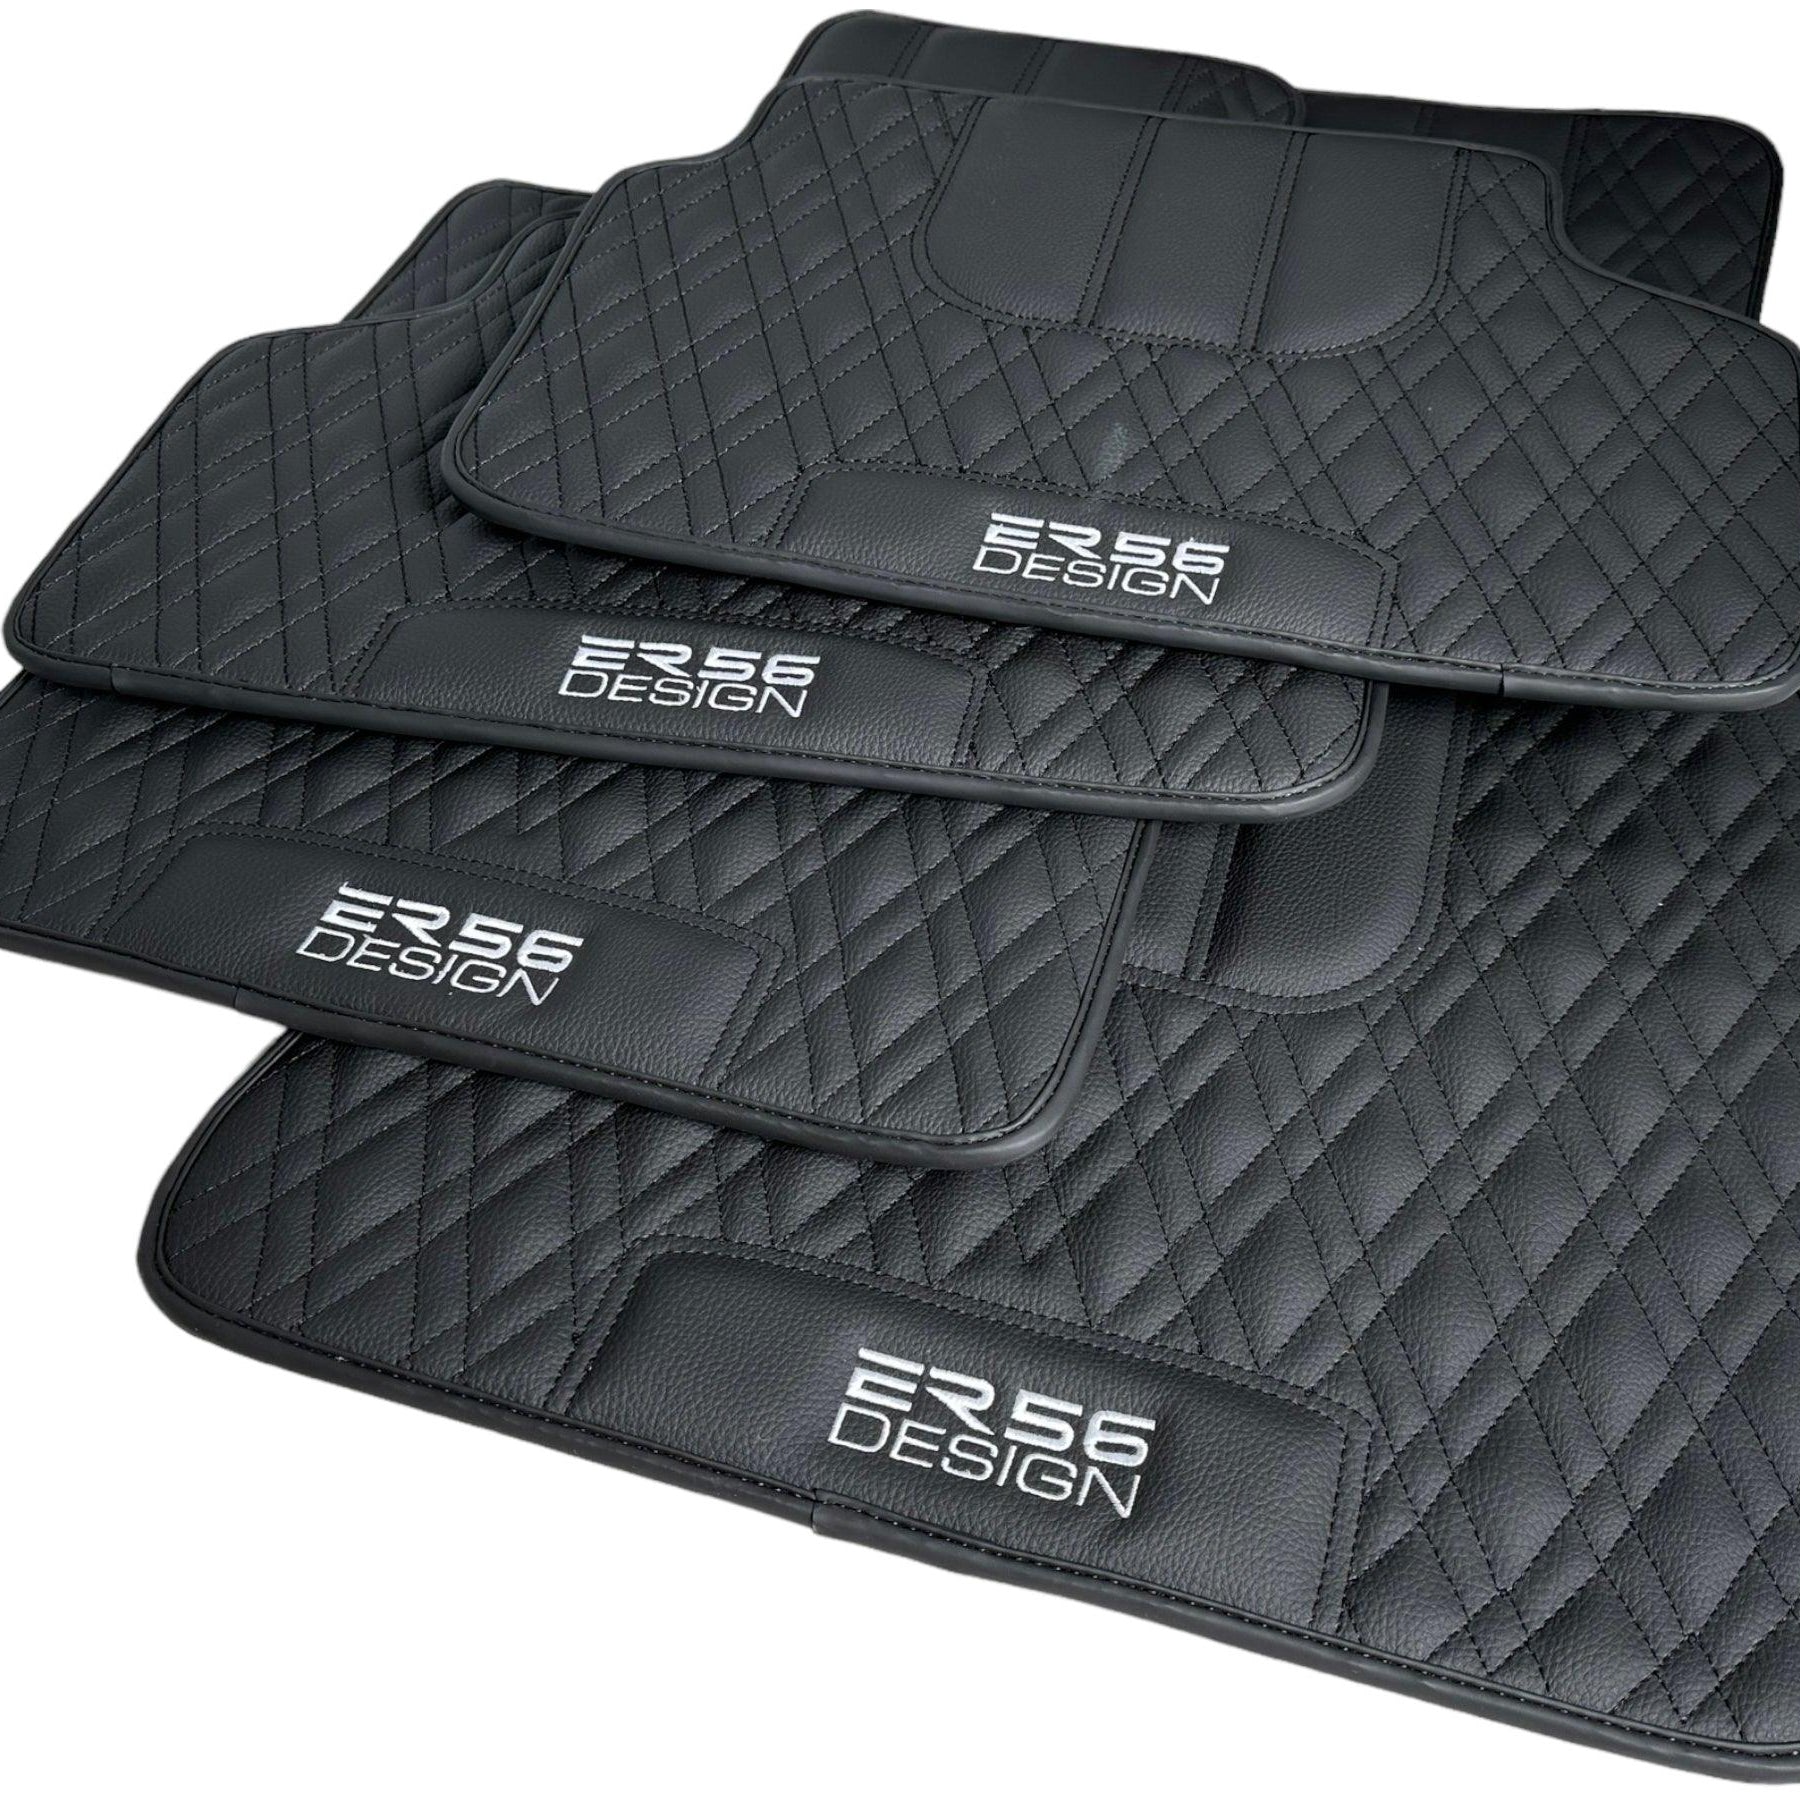 Floor Mats For BMW 1 Series E88 Convertible Black Leather Er56 Design - AutoWin